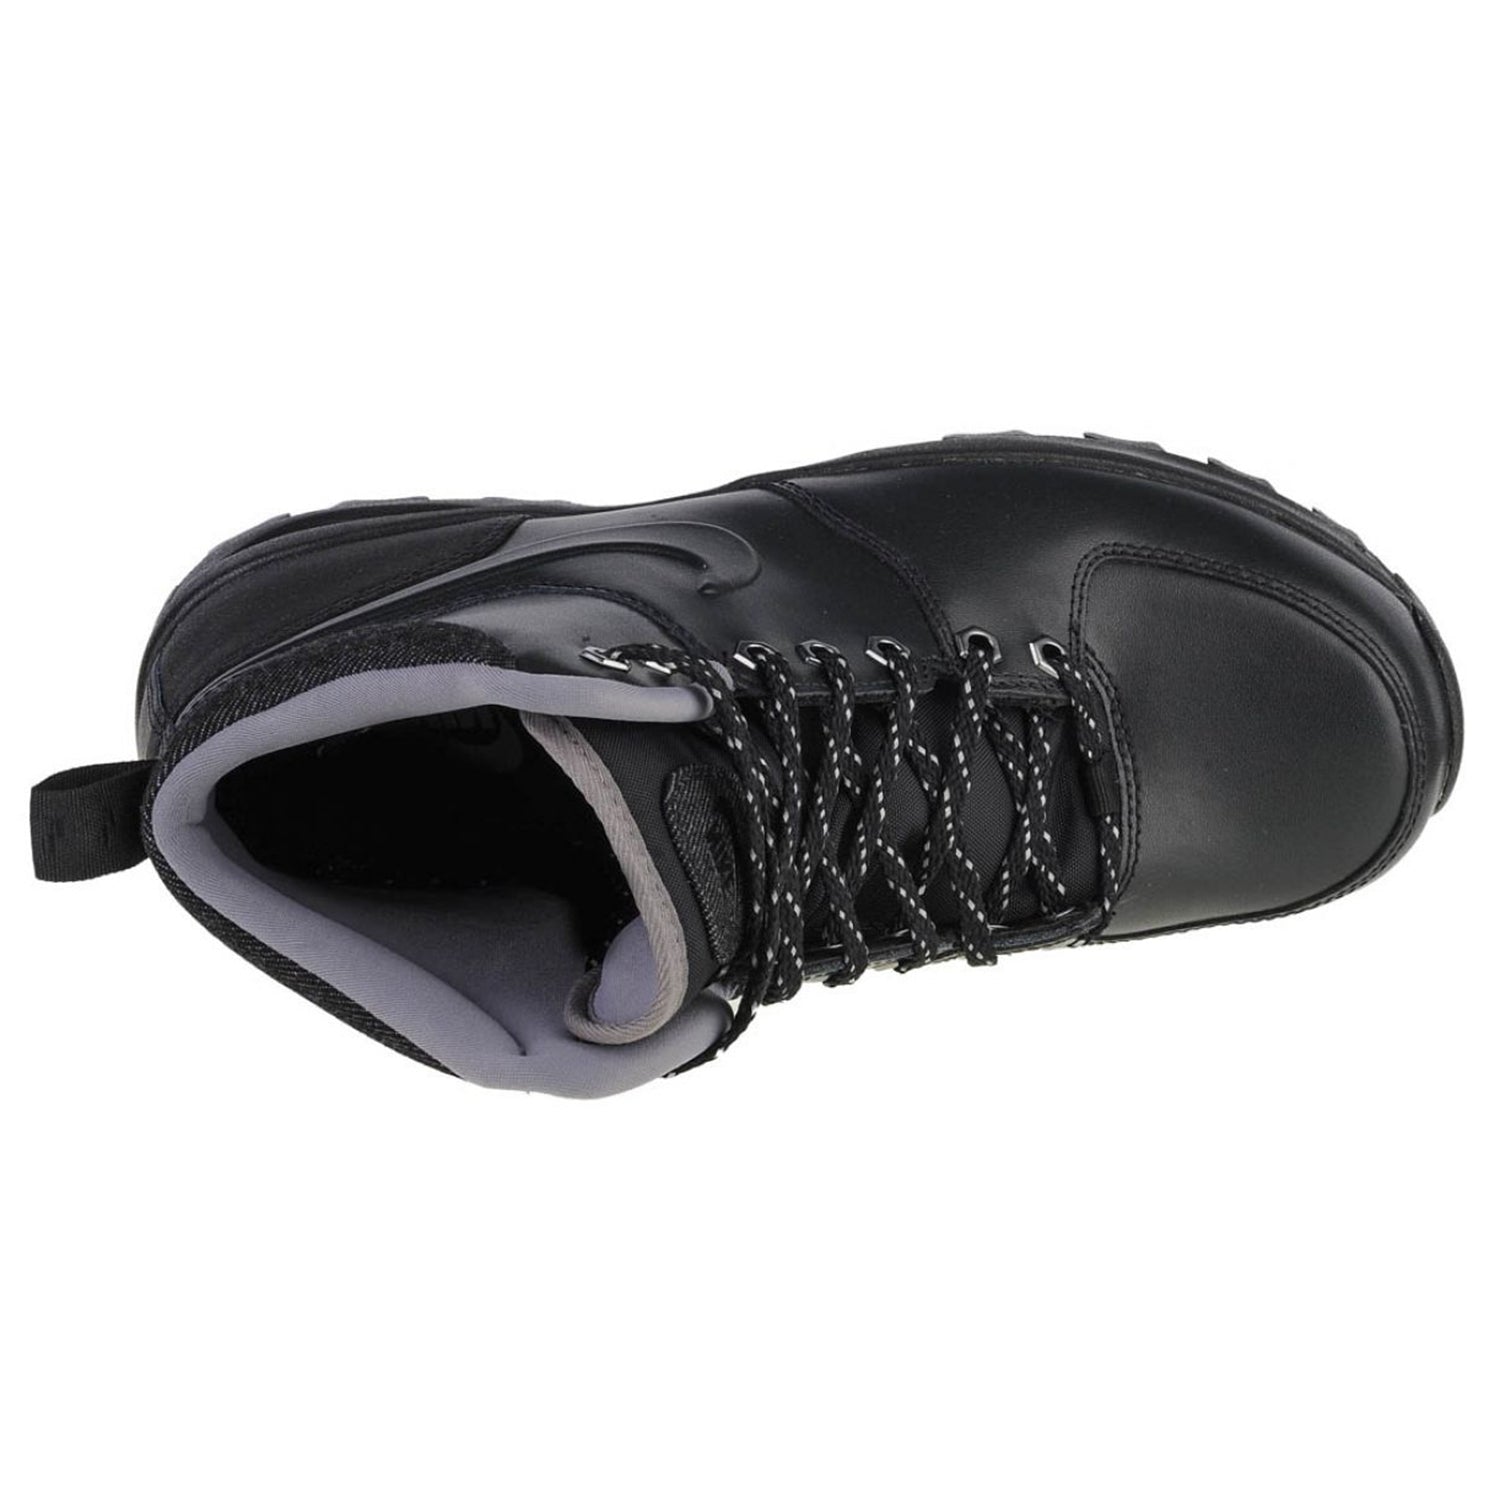 Nike Manoa Leather SE Black